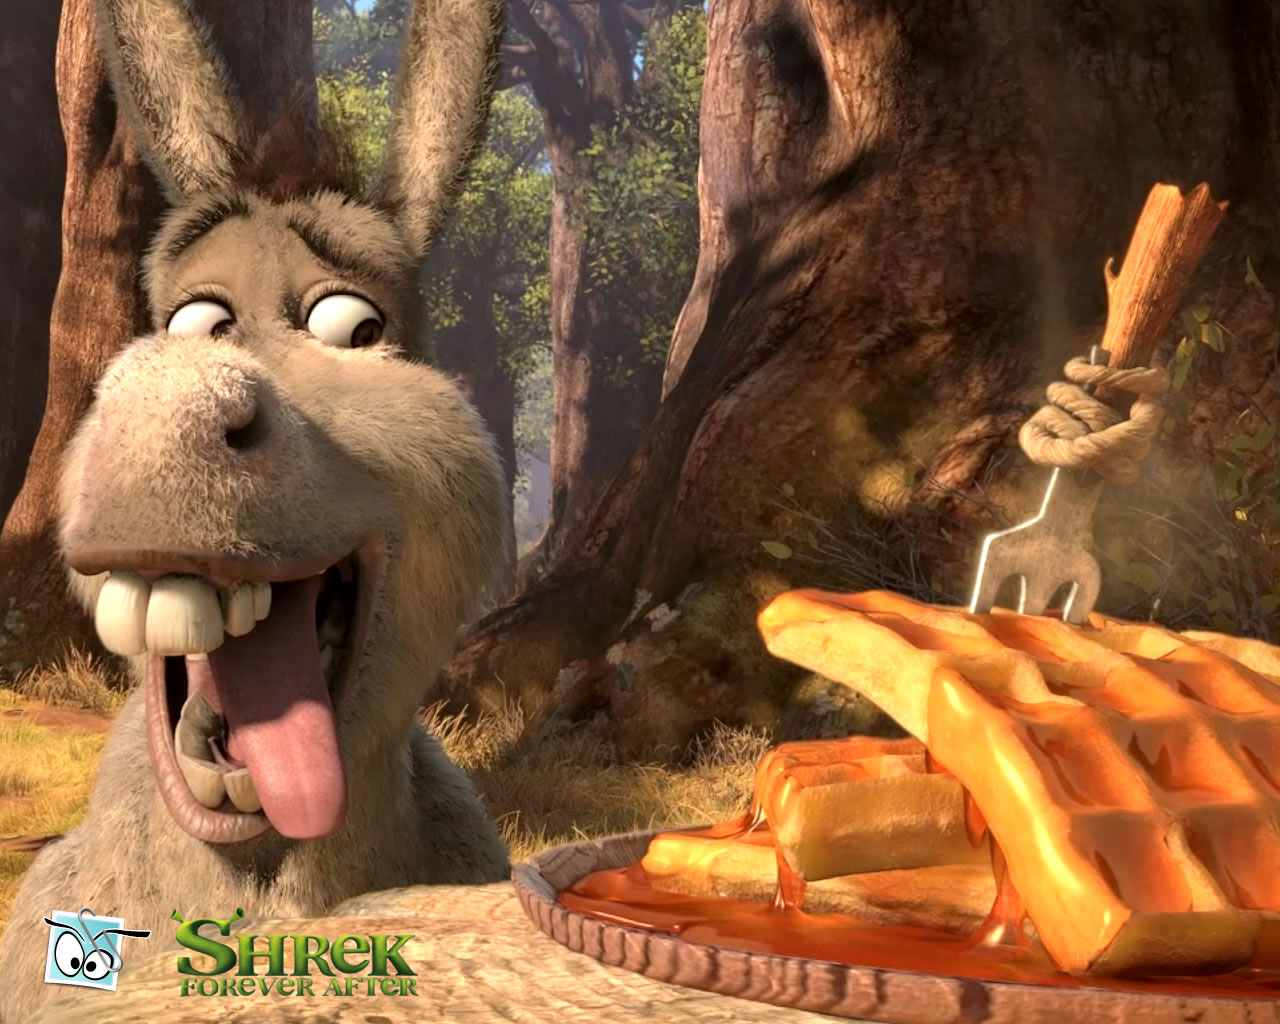 download wallpaper: Shrek 4 – Donkey eet wafels wallpaper